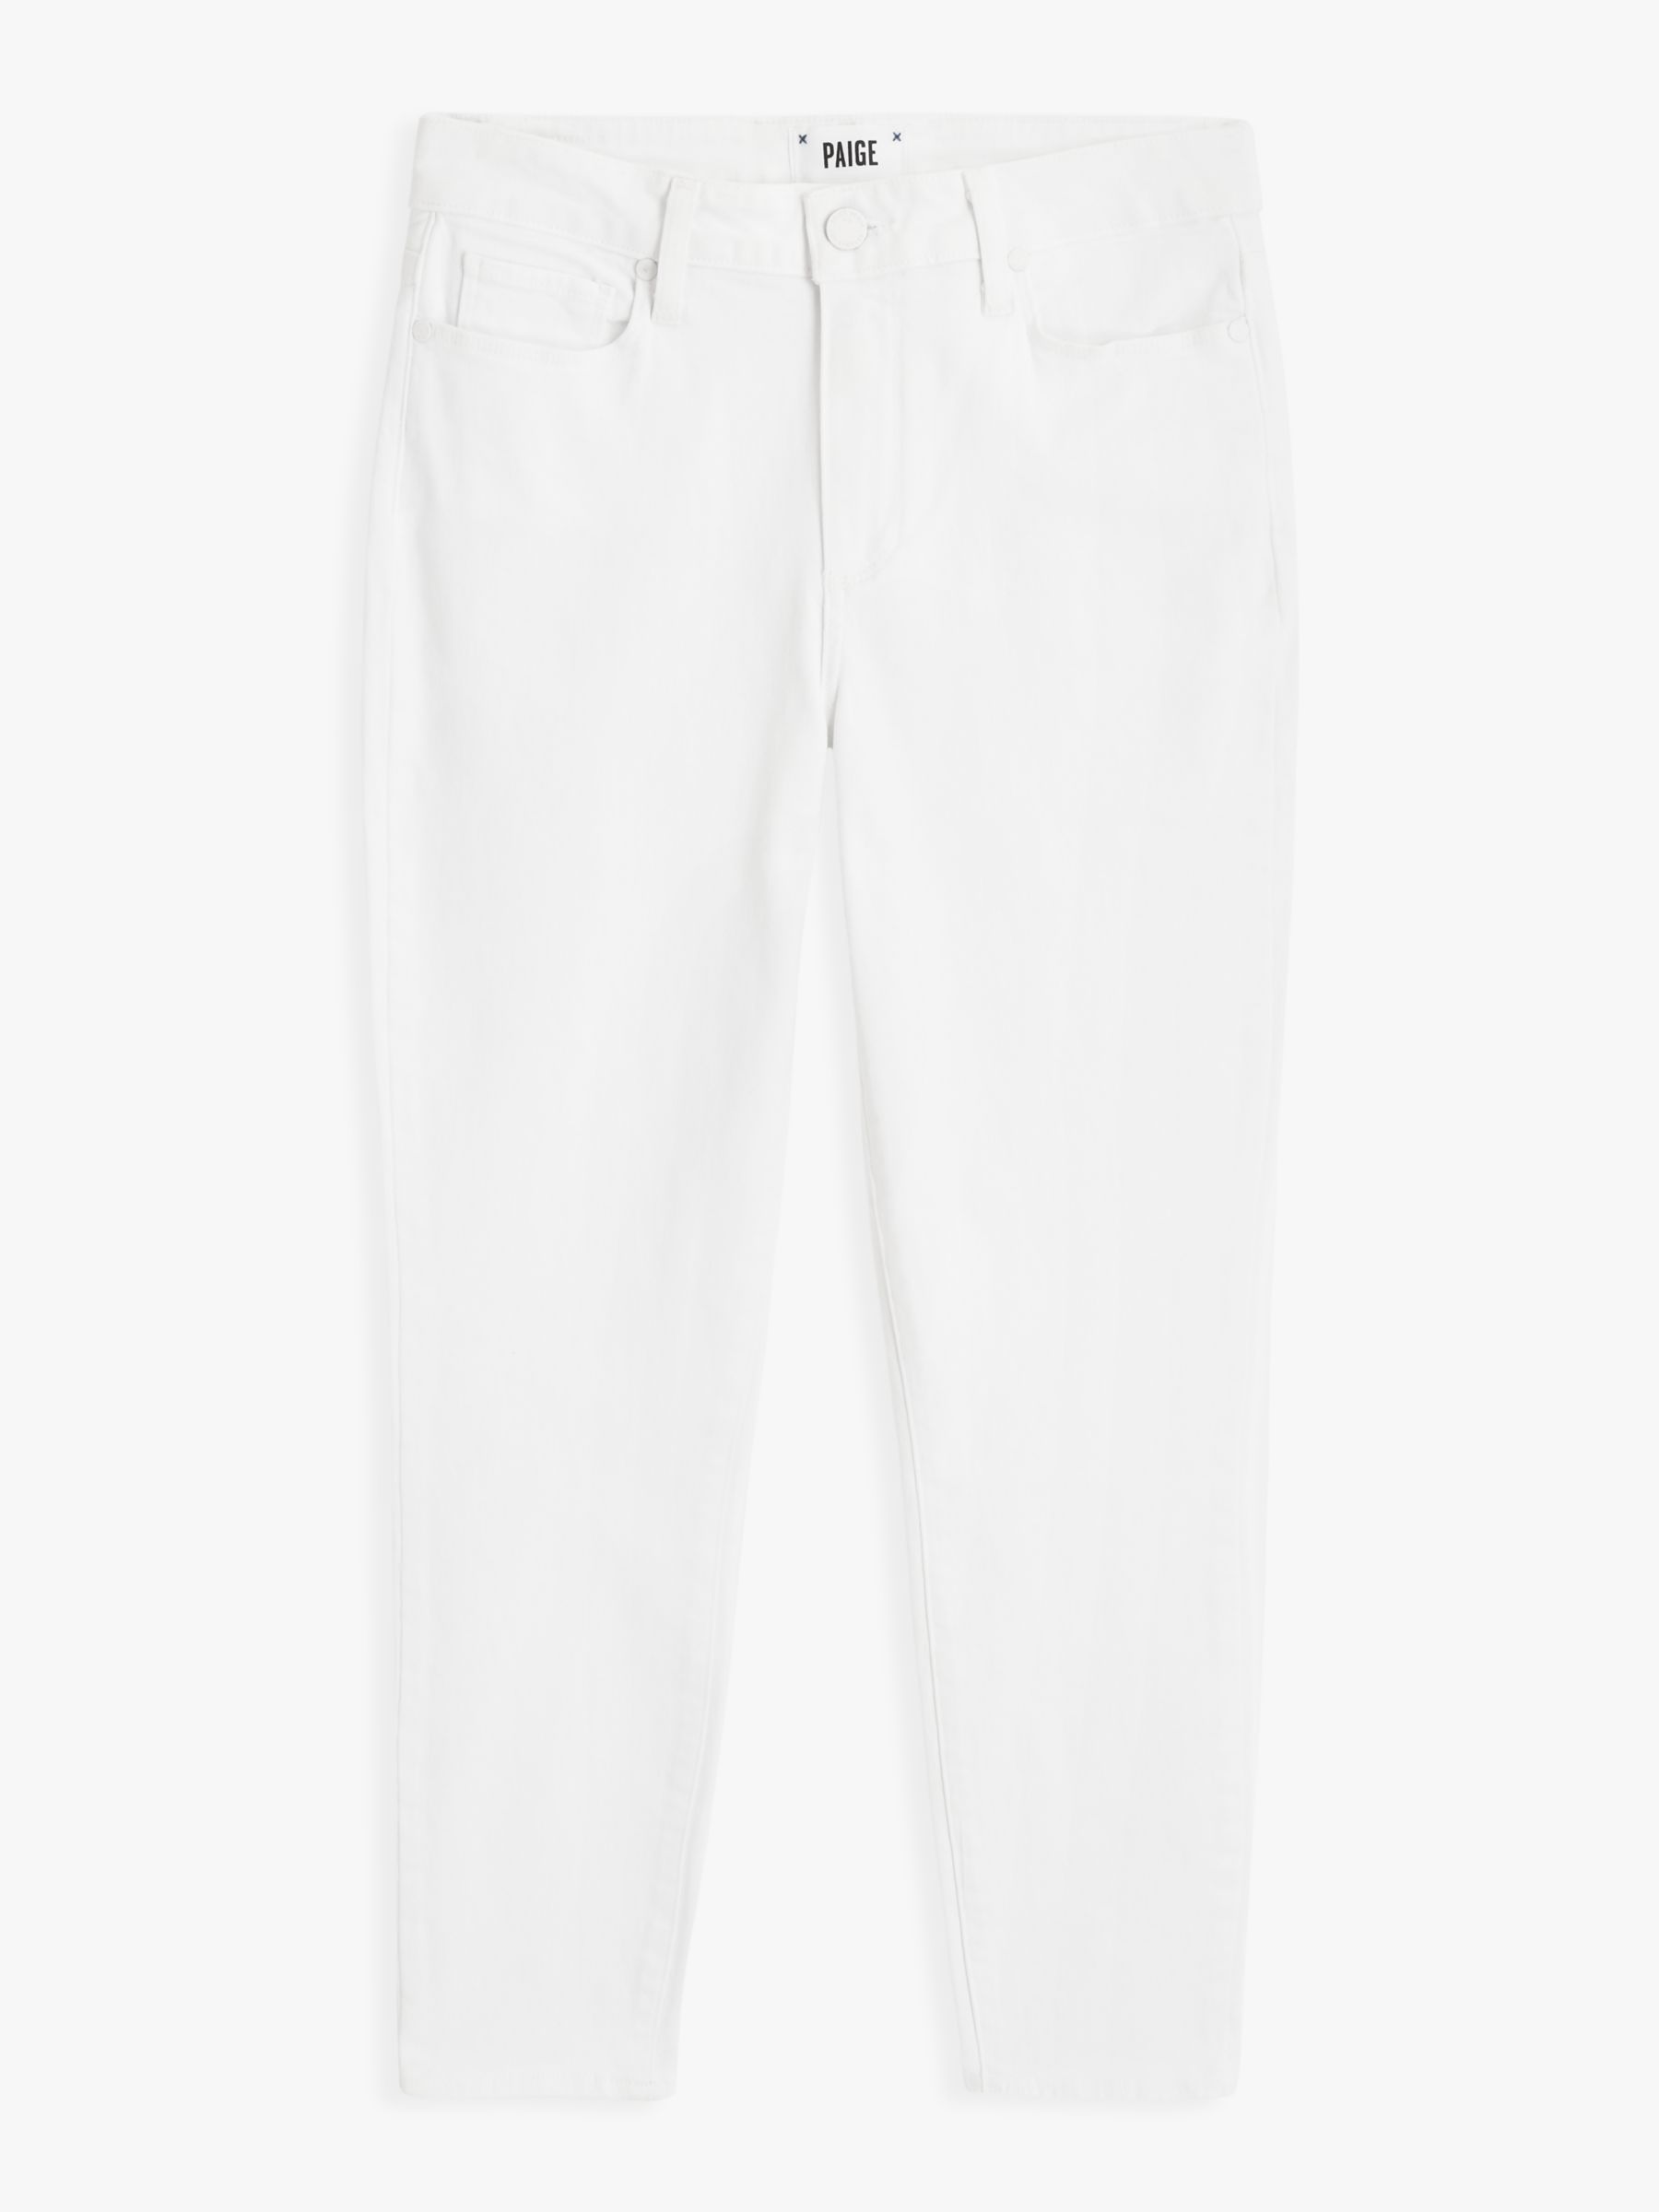 PAIGE Hoxton High Rise Ultra Skinny Jeans, Crisp White, 28